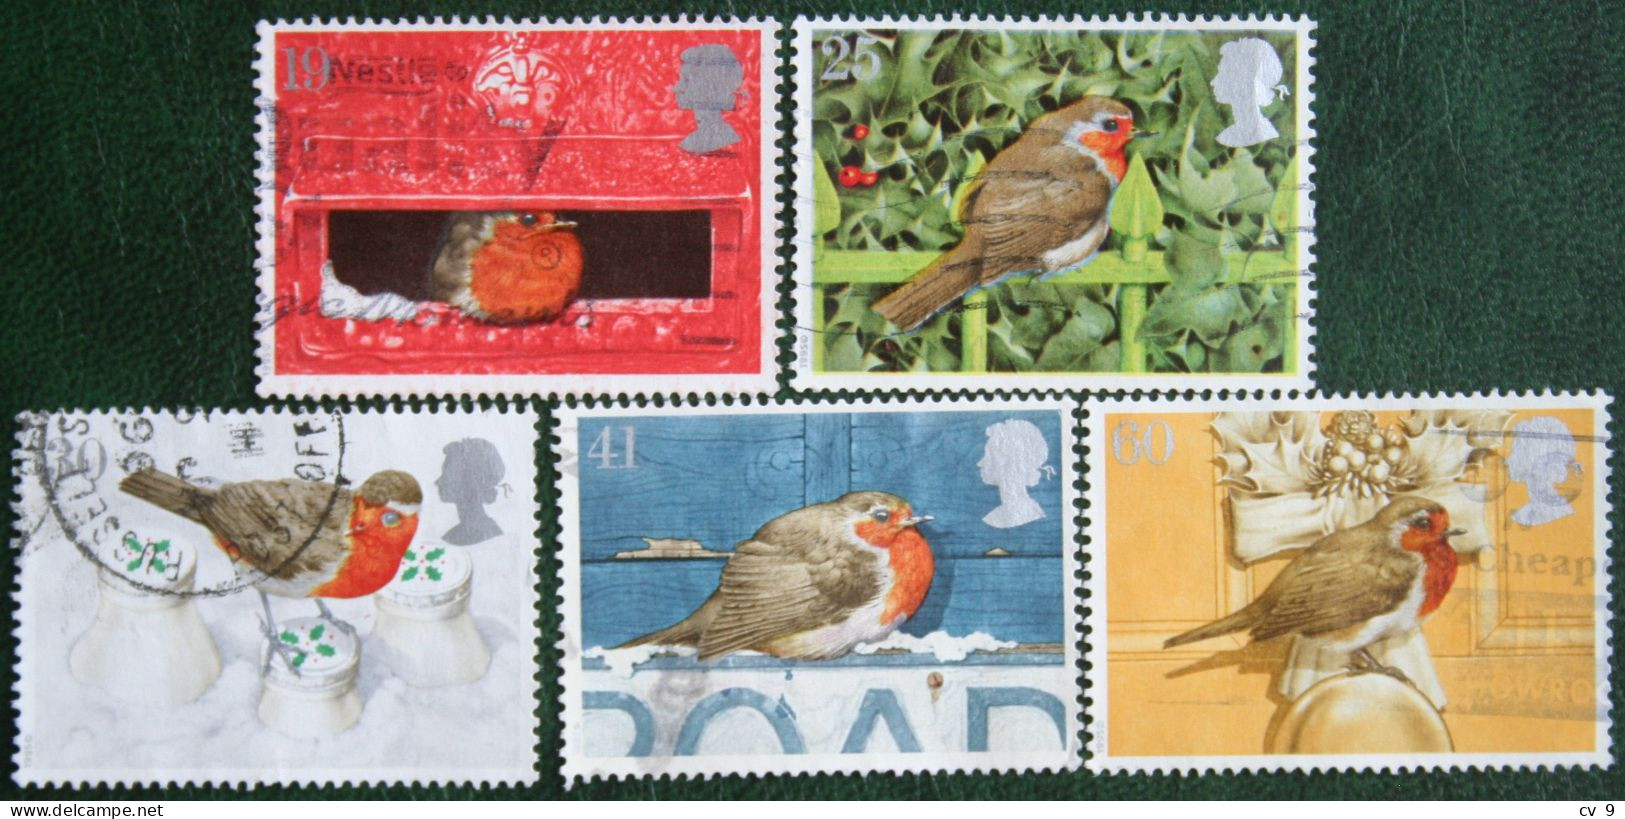 Natale Weihnachten Xmas Noel Robin (Mi 1596-1600) 1995 Used Gebruikt Oblitere ENGLAND GRANDE-BRETAGNE GB GREAT BRITAIN - Used Stamps